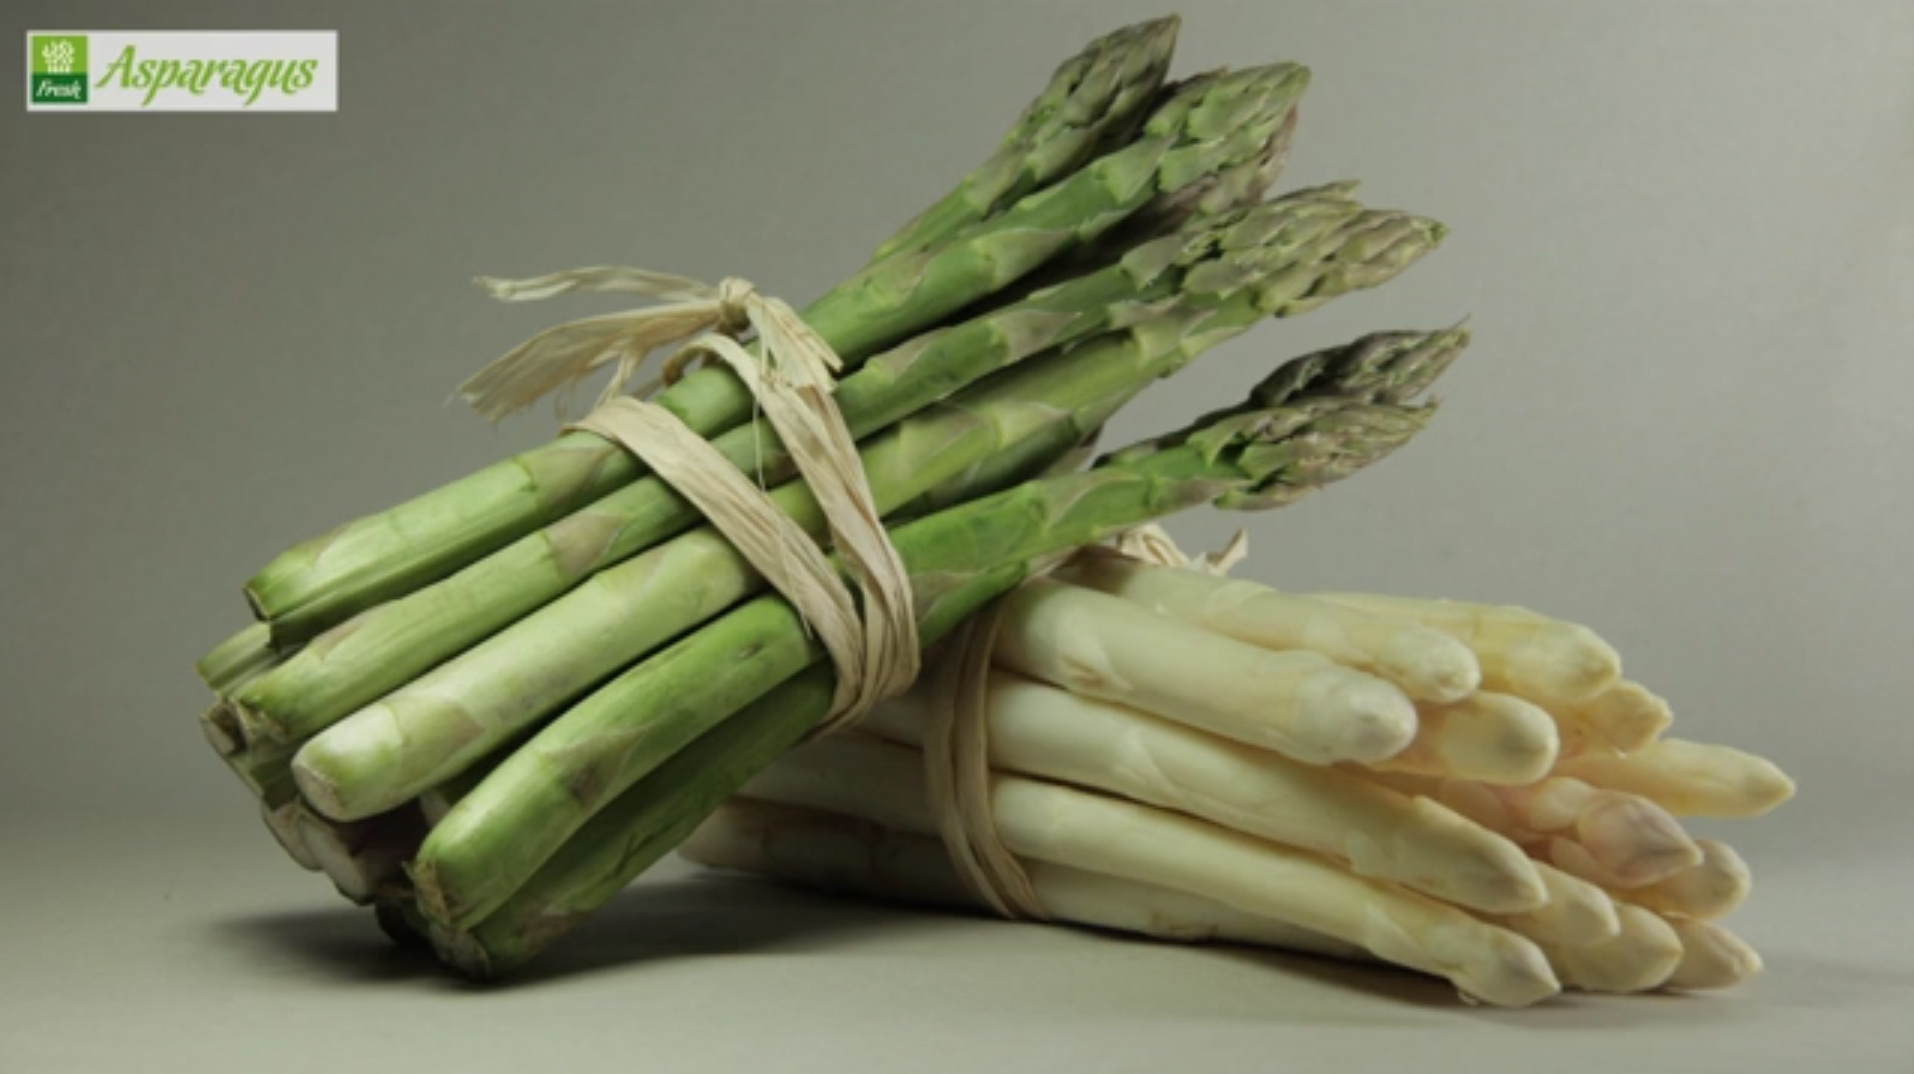 Greek asparagus - Promotional video